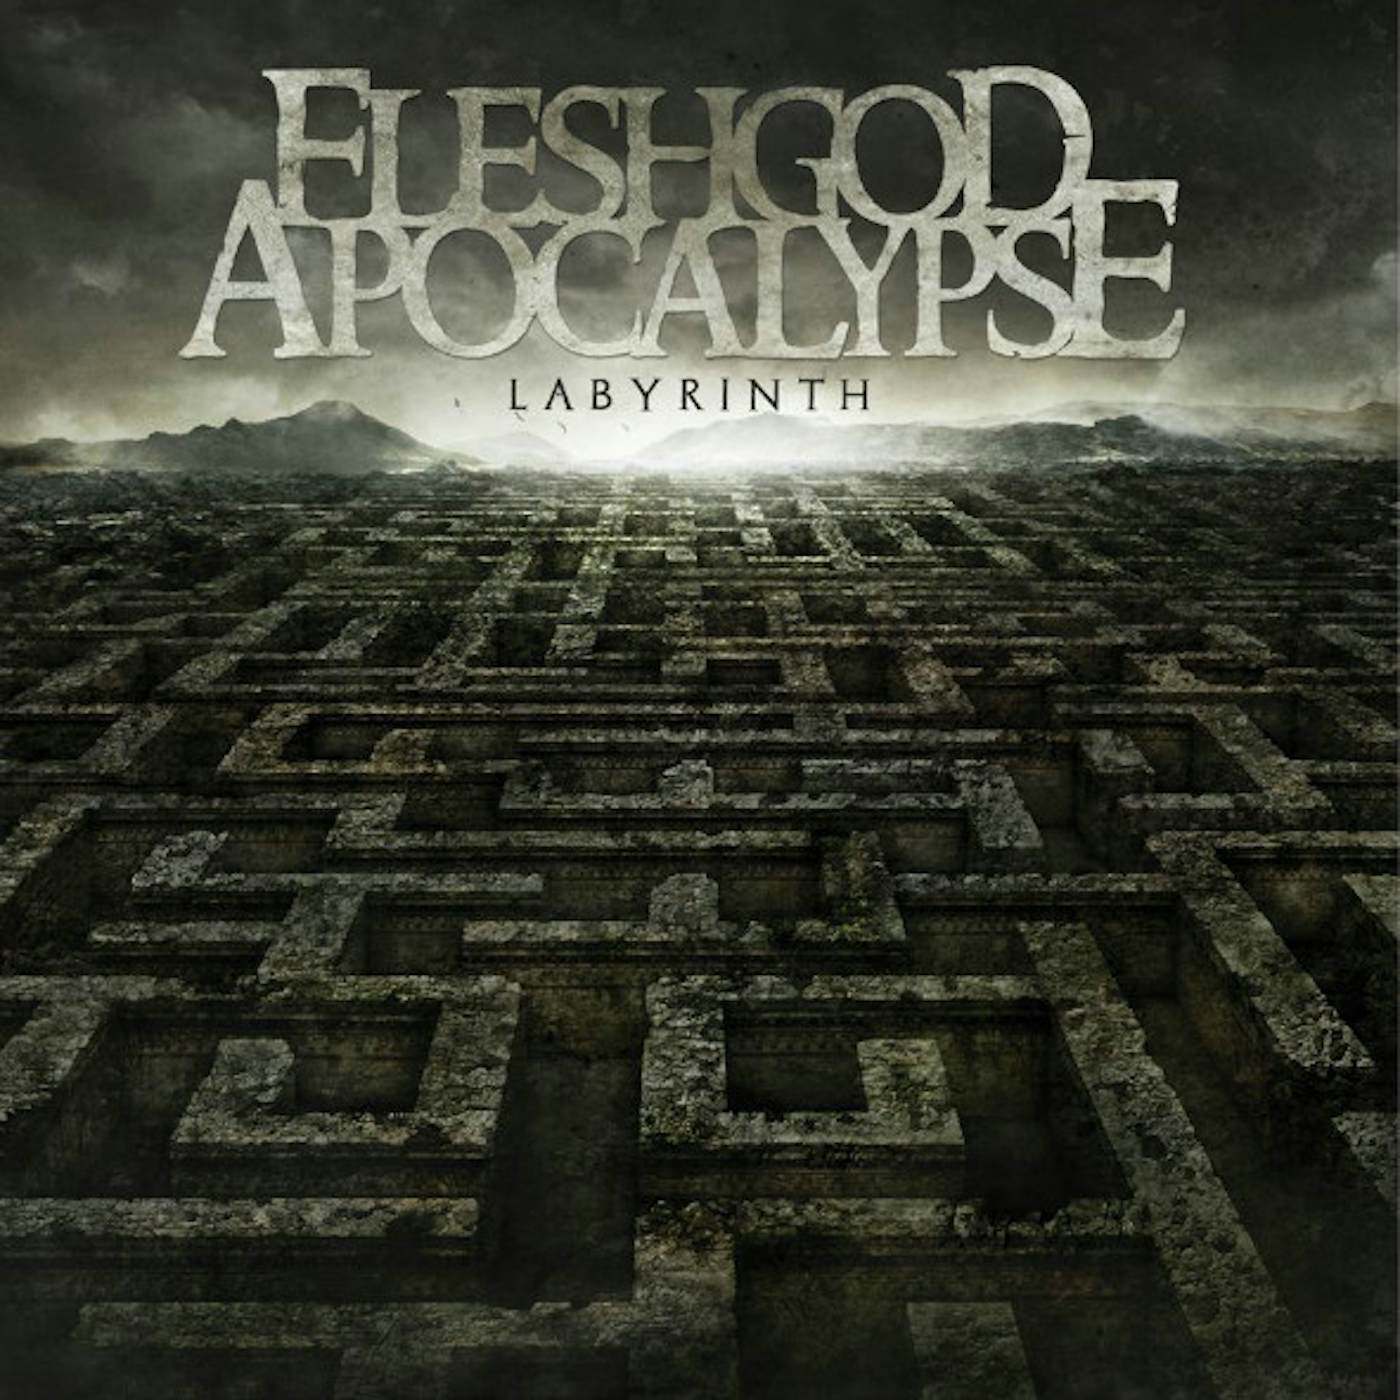 Fleshgod Apocalypse LABYRINTH Vinyl Record - Italy Release